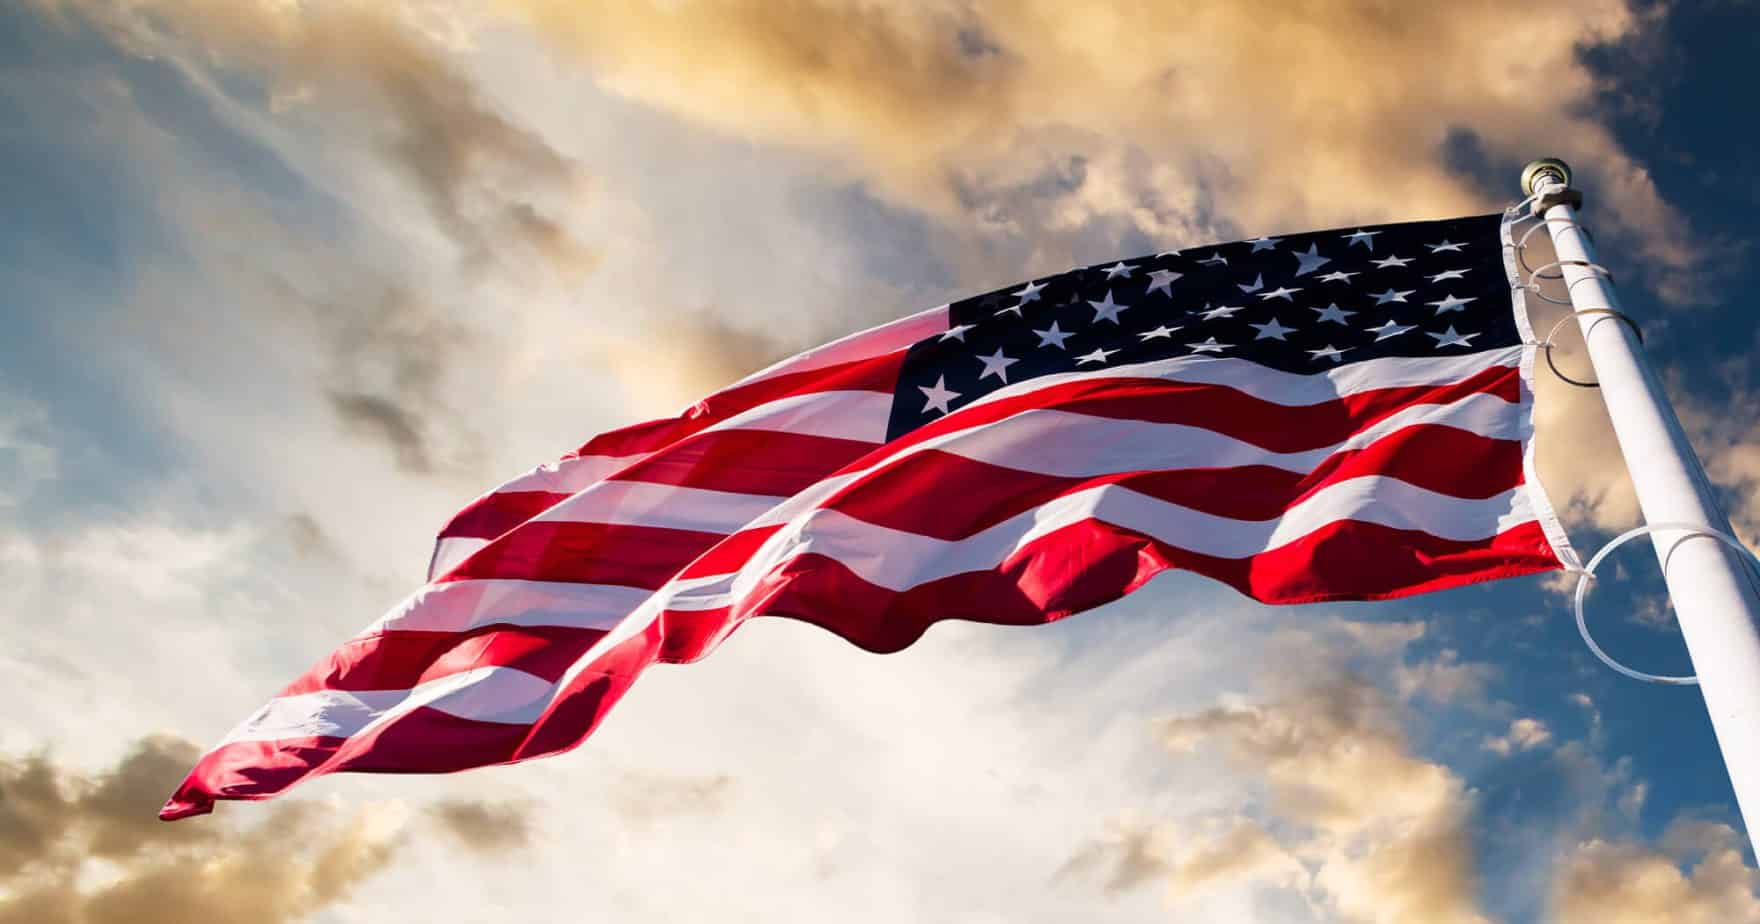 The American flag: Explore Regent, a military friendly school in Virginia Beach VA 23464.